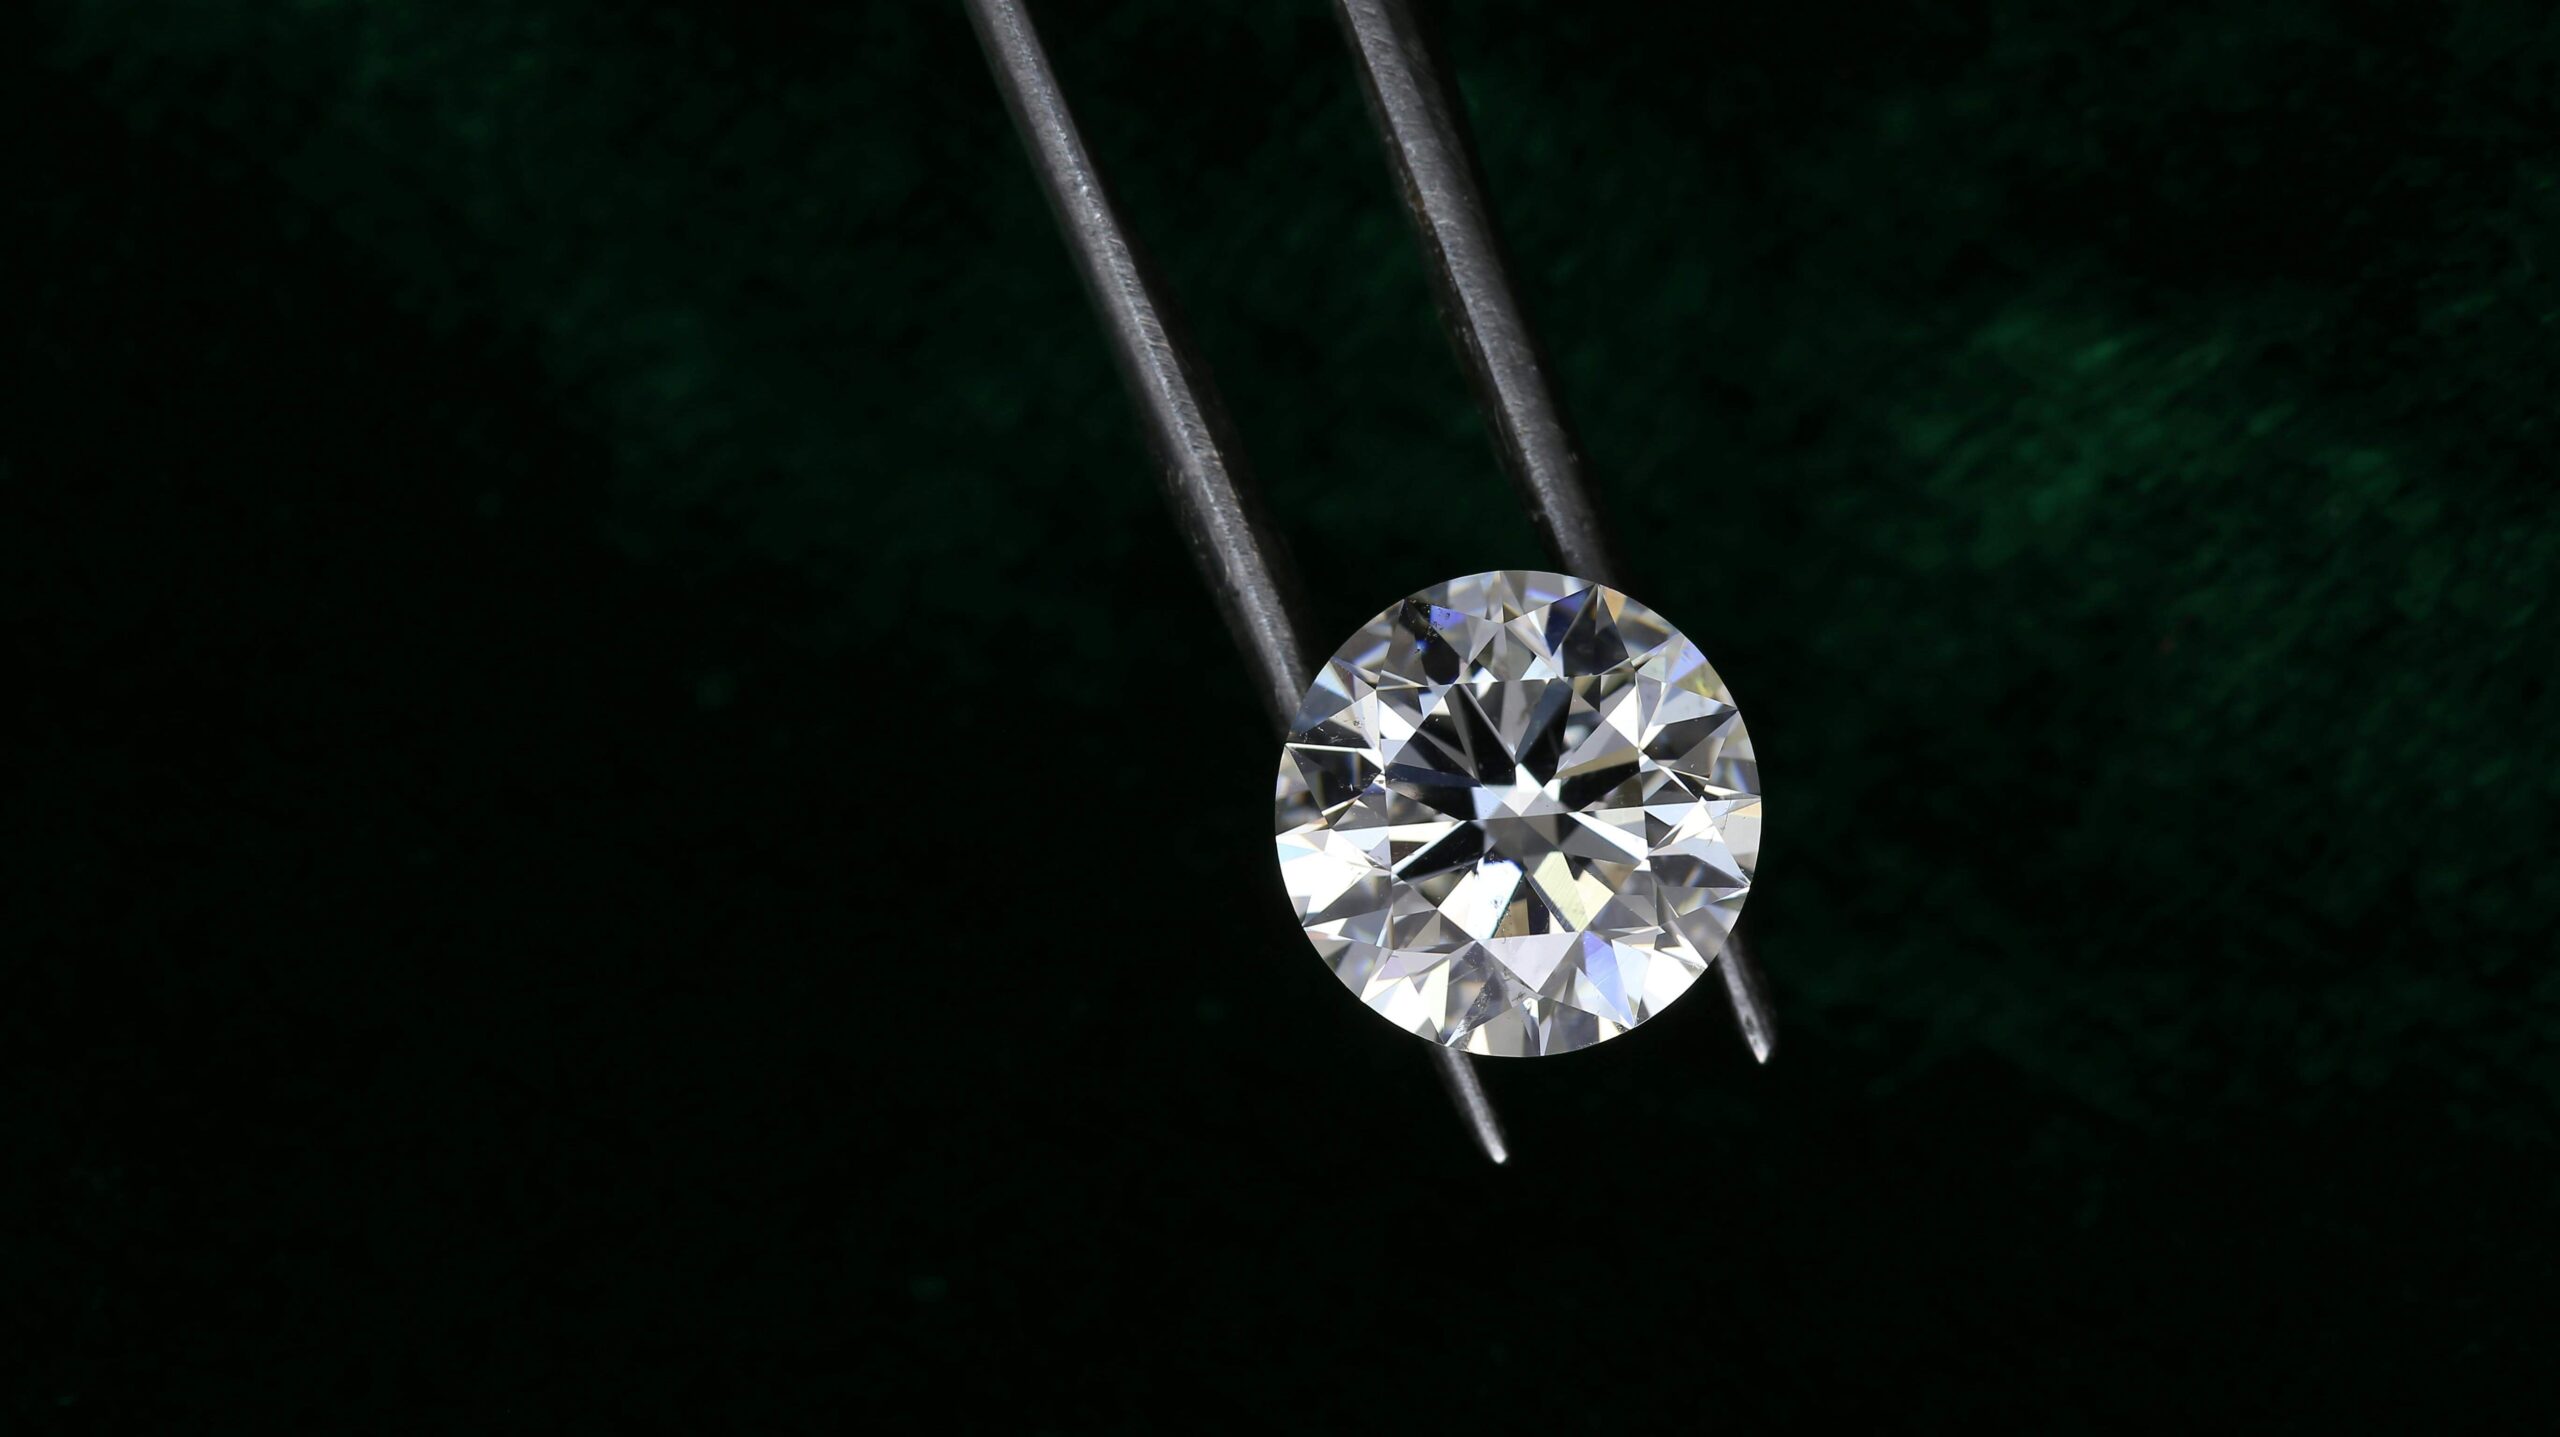 Round diamond stone held by a tweezer on a dark background